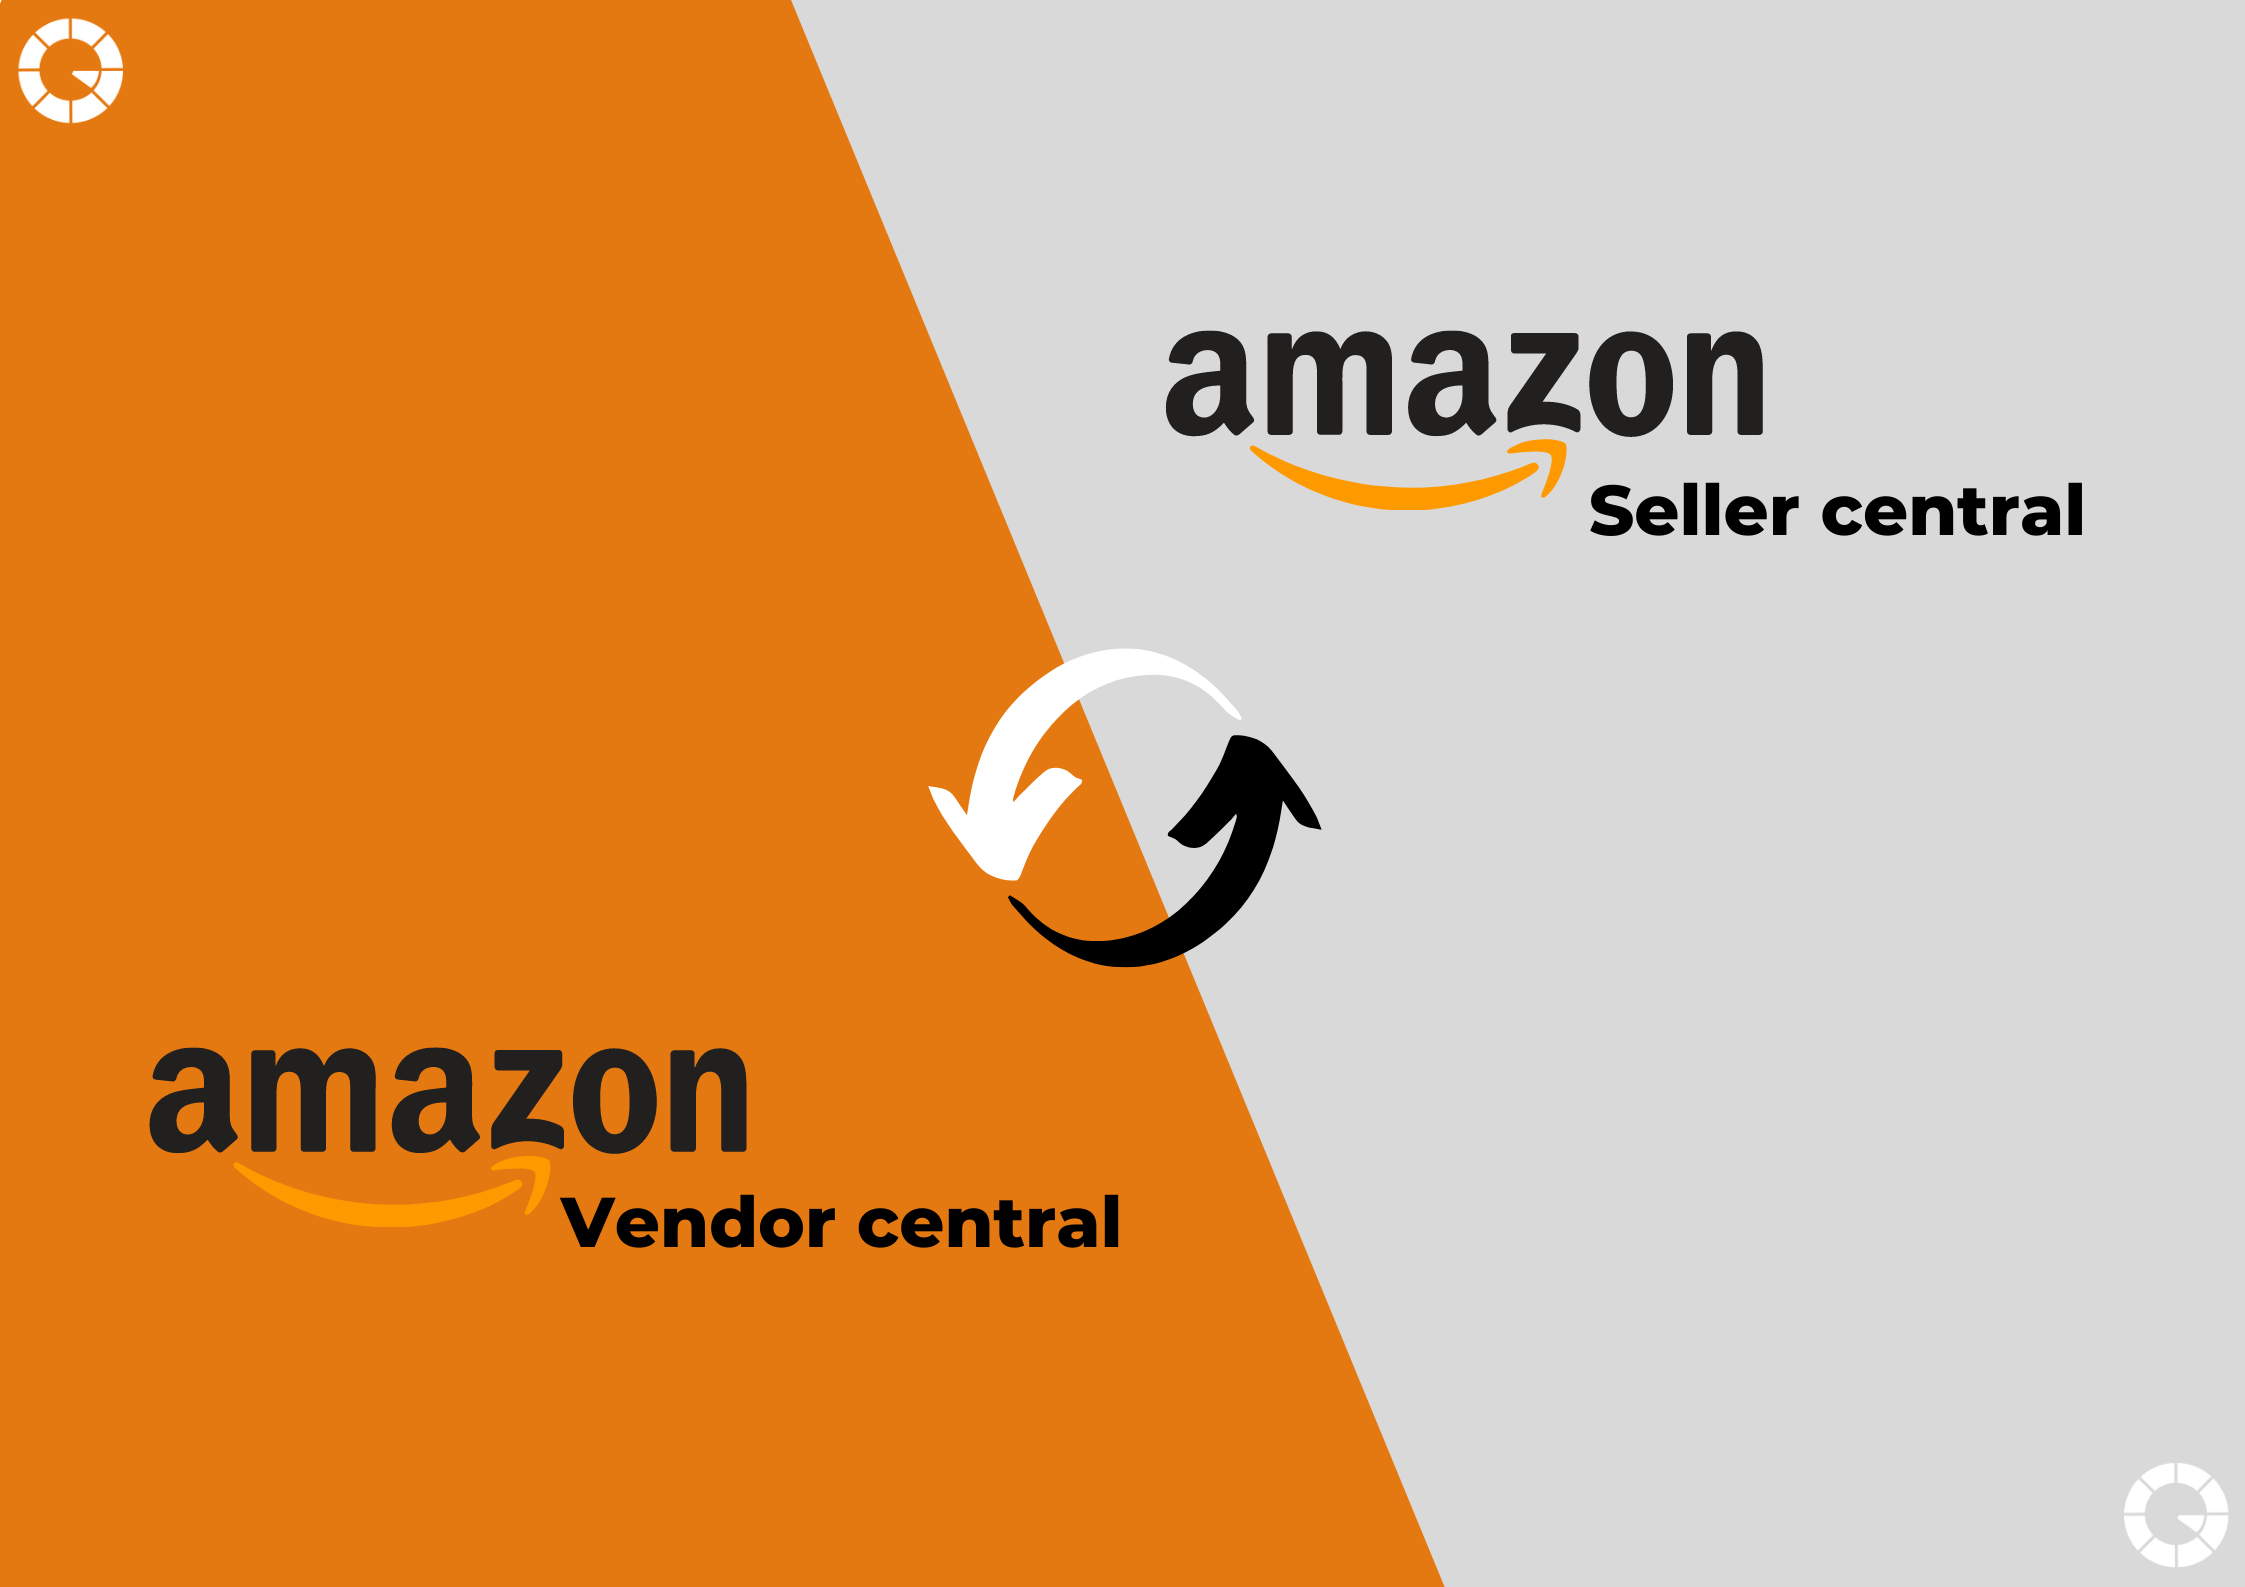 Amazon Seller y Amazon Vendor Datali Group